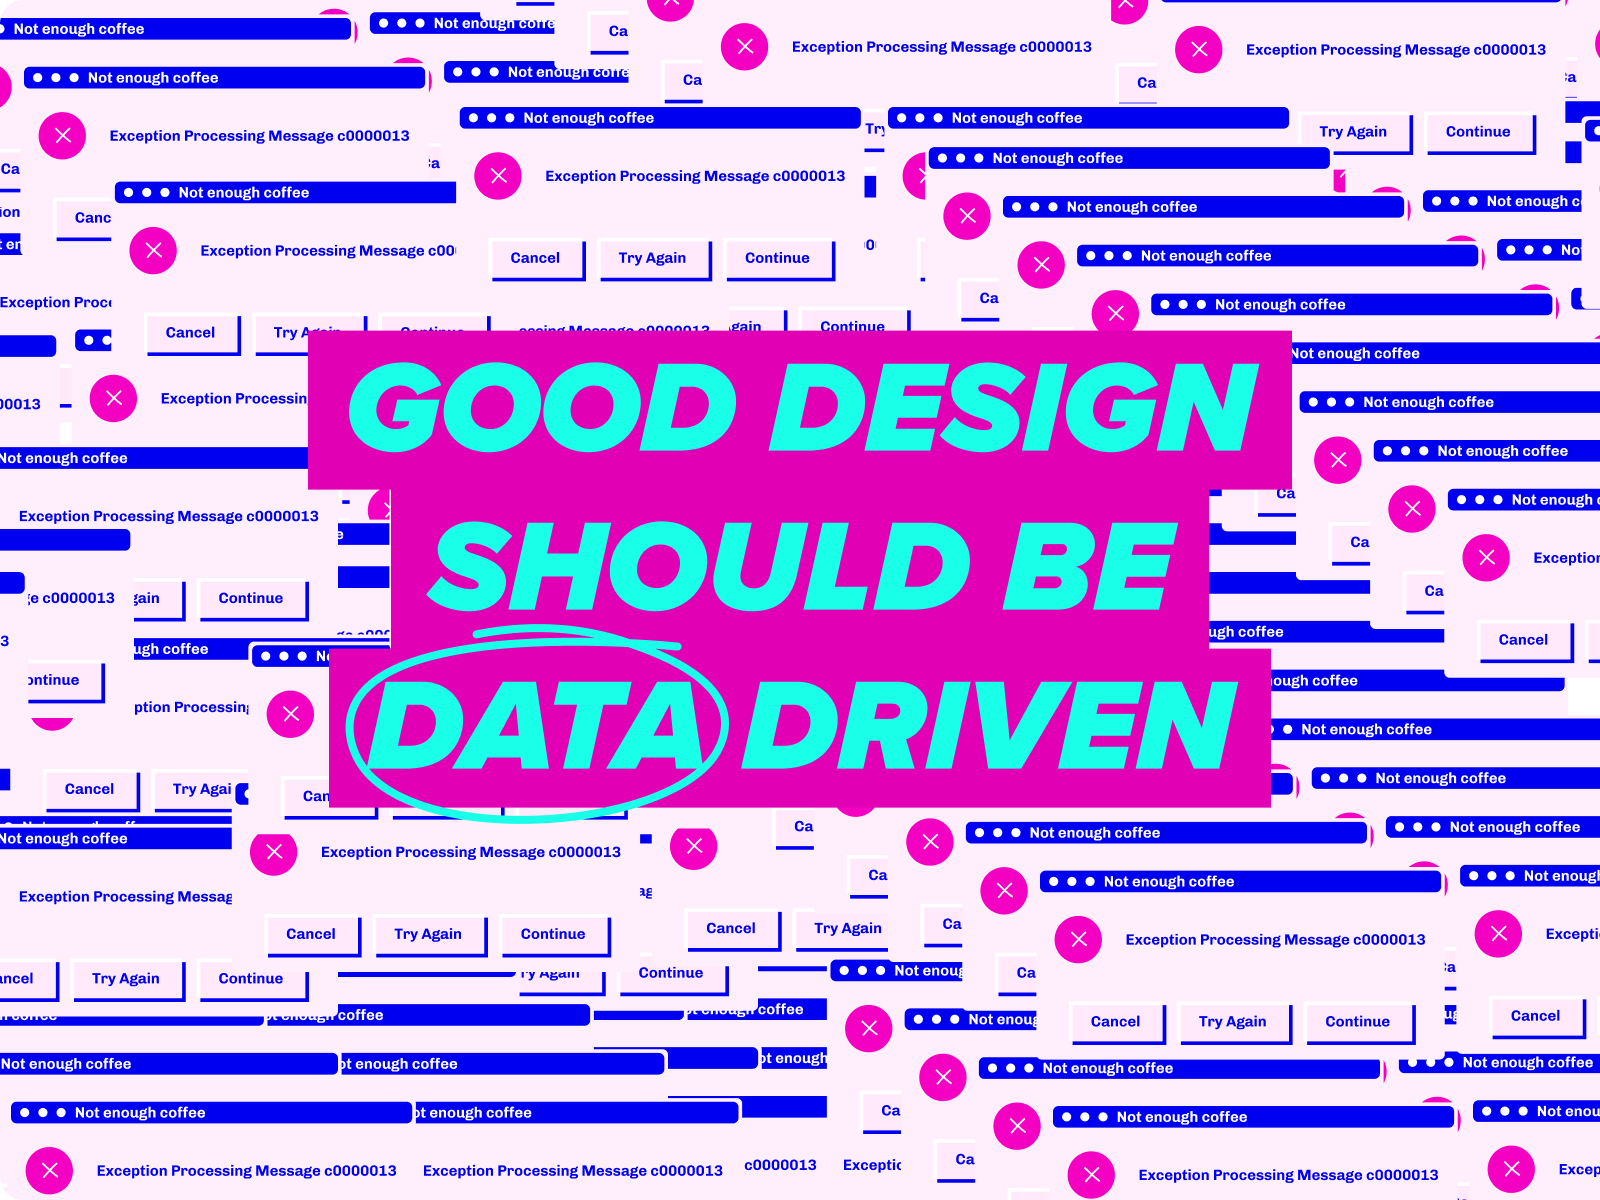 Good design should be data driven